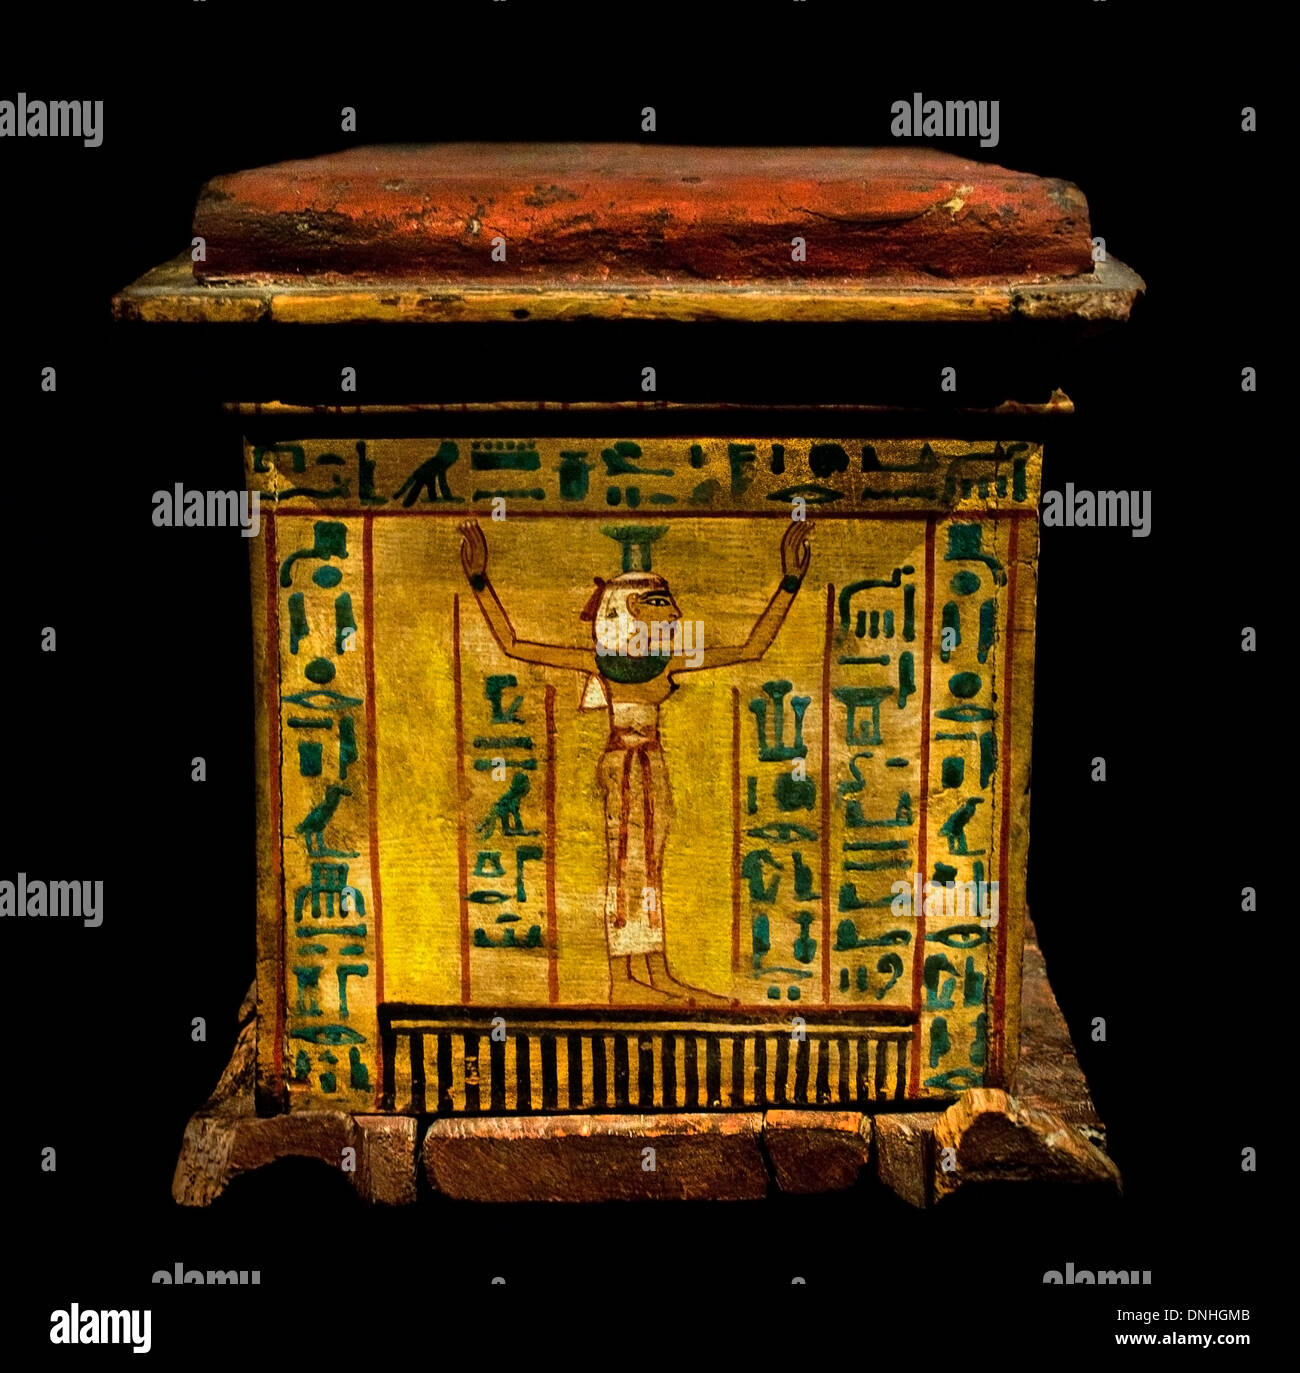 Ataúd niña Nefretiri está en la forma de un santuario divino - Diosa Nephthys protege el difunto 1220 A.C. Egipto Egipto Foto de stock